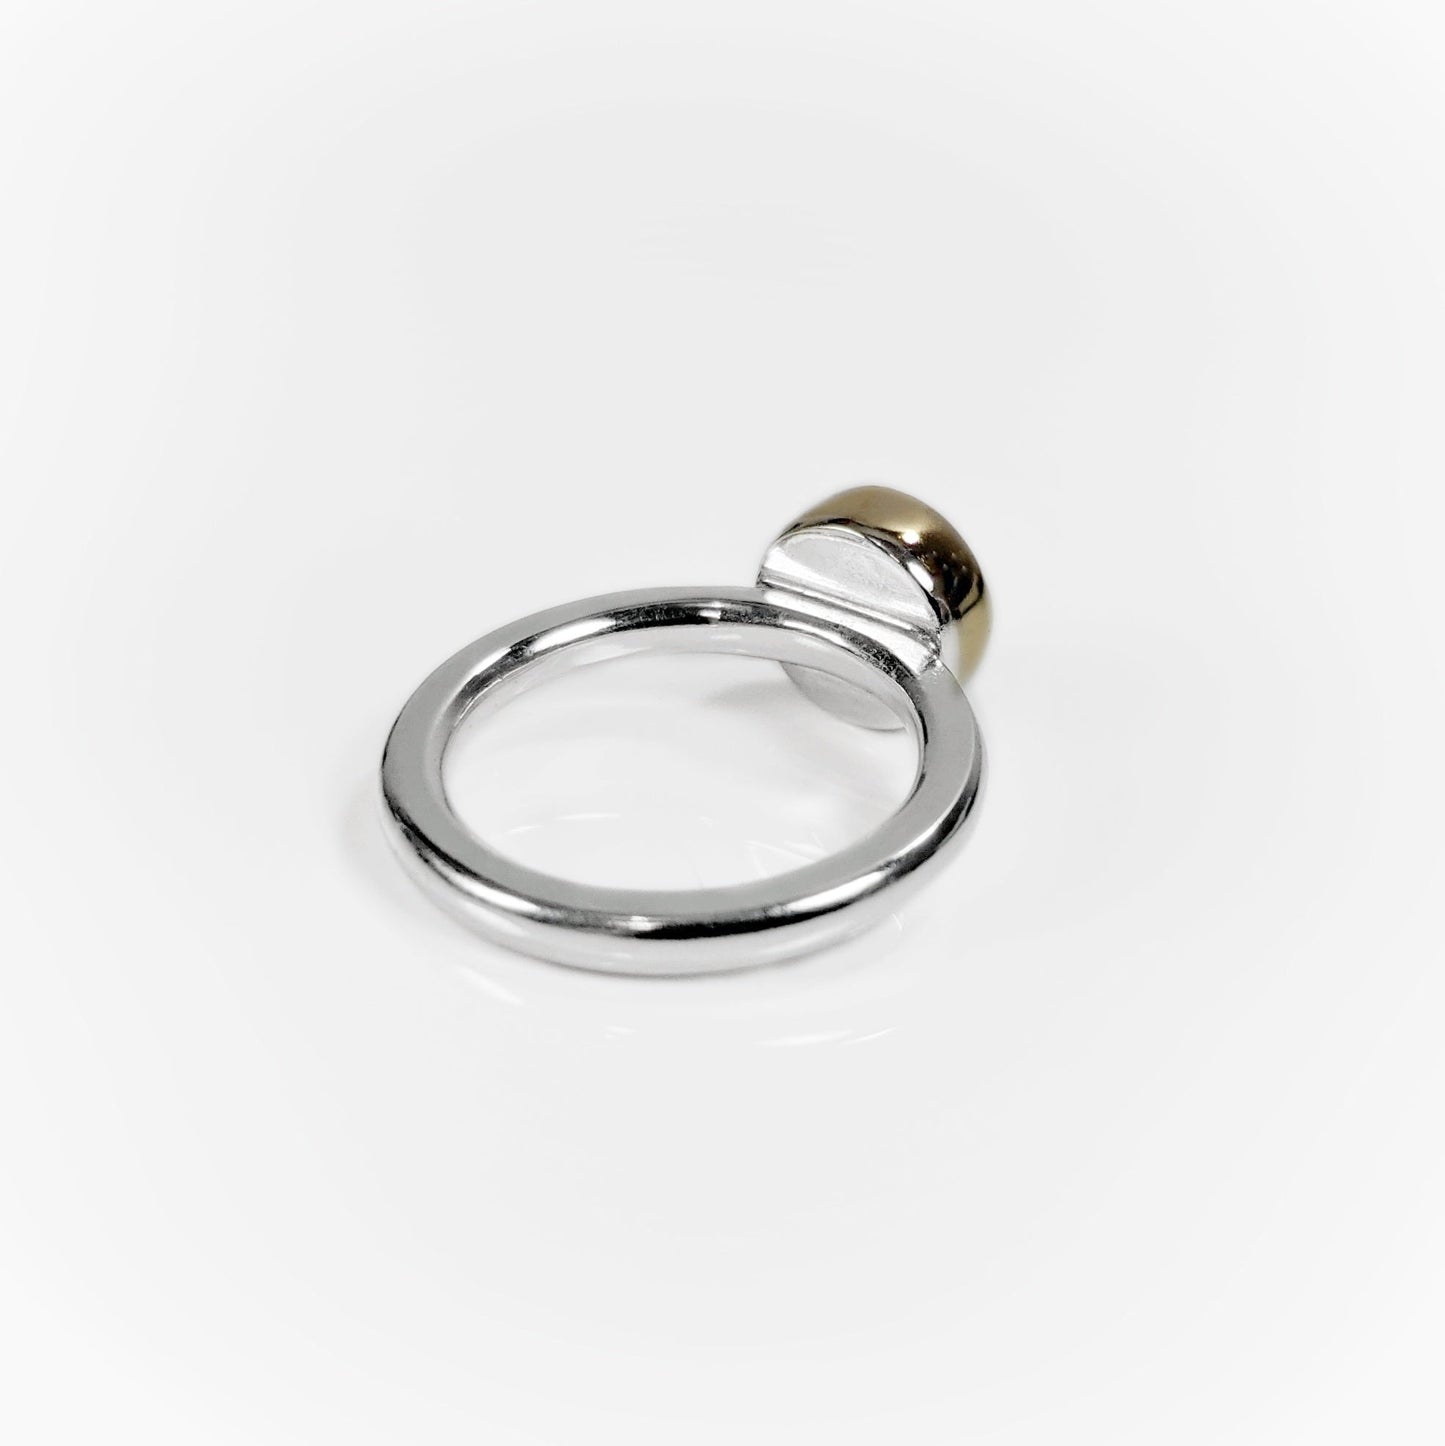 Heirloom Sleek Round Faceted Memorial Ring - 10k Gold & Silver - Upgraded 10mm Gem